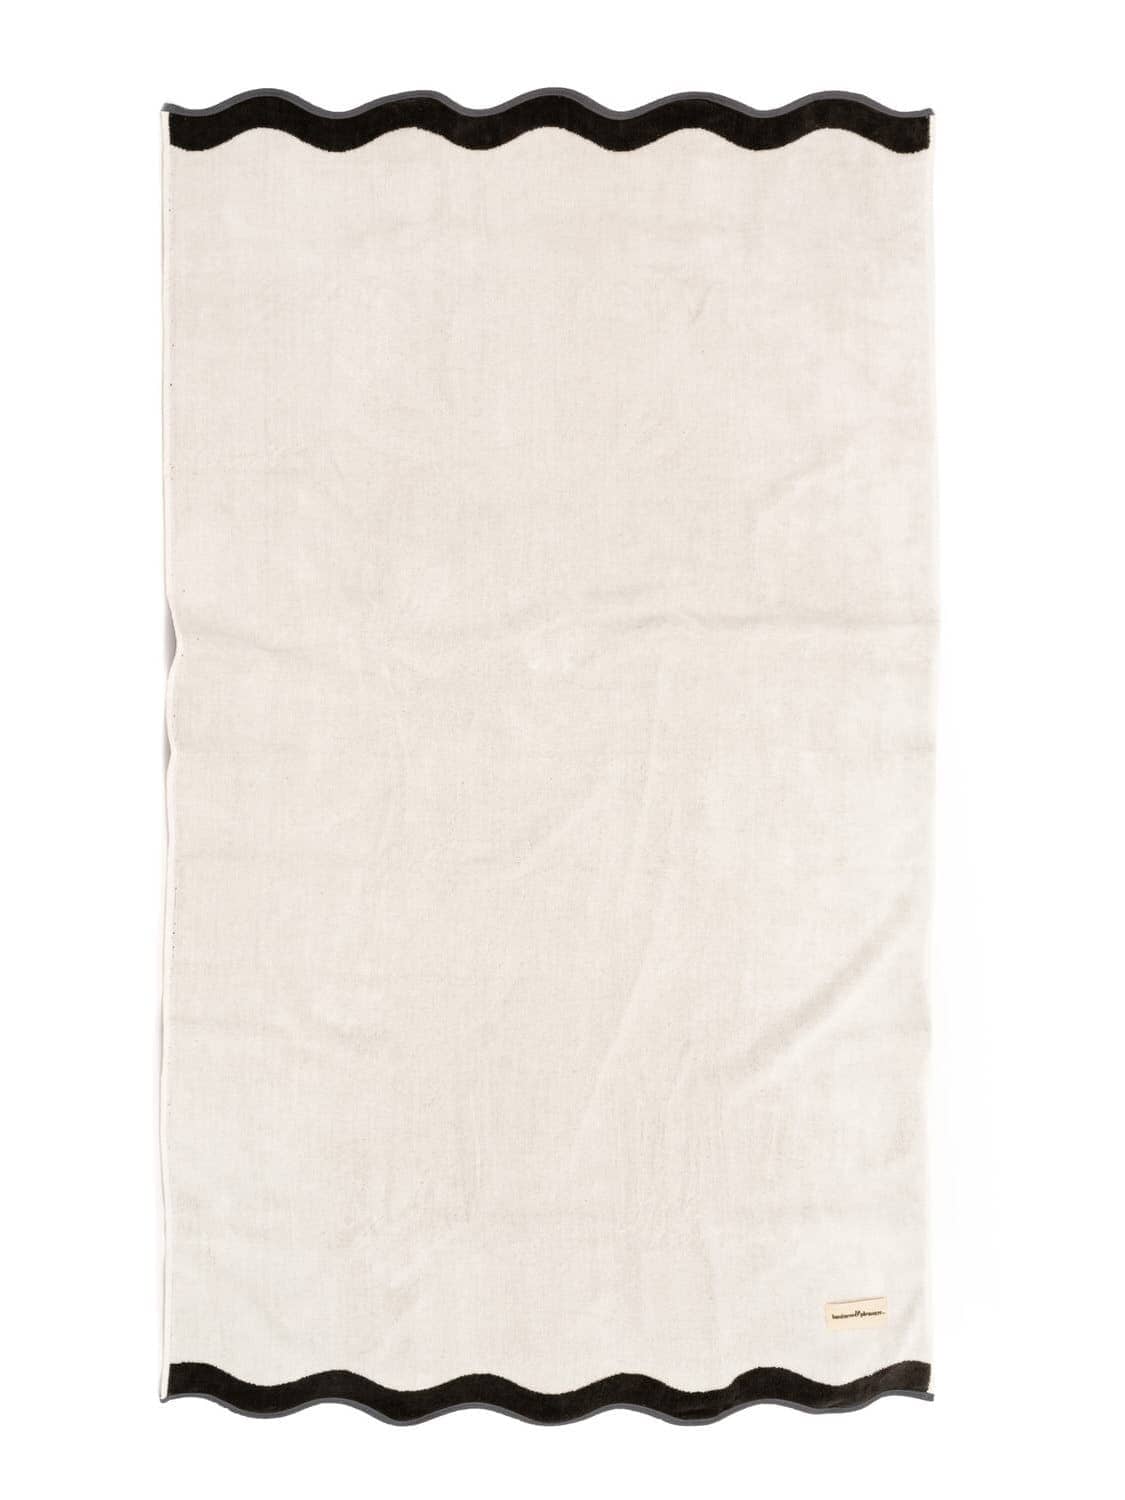 Studio image of riviera white beach towel